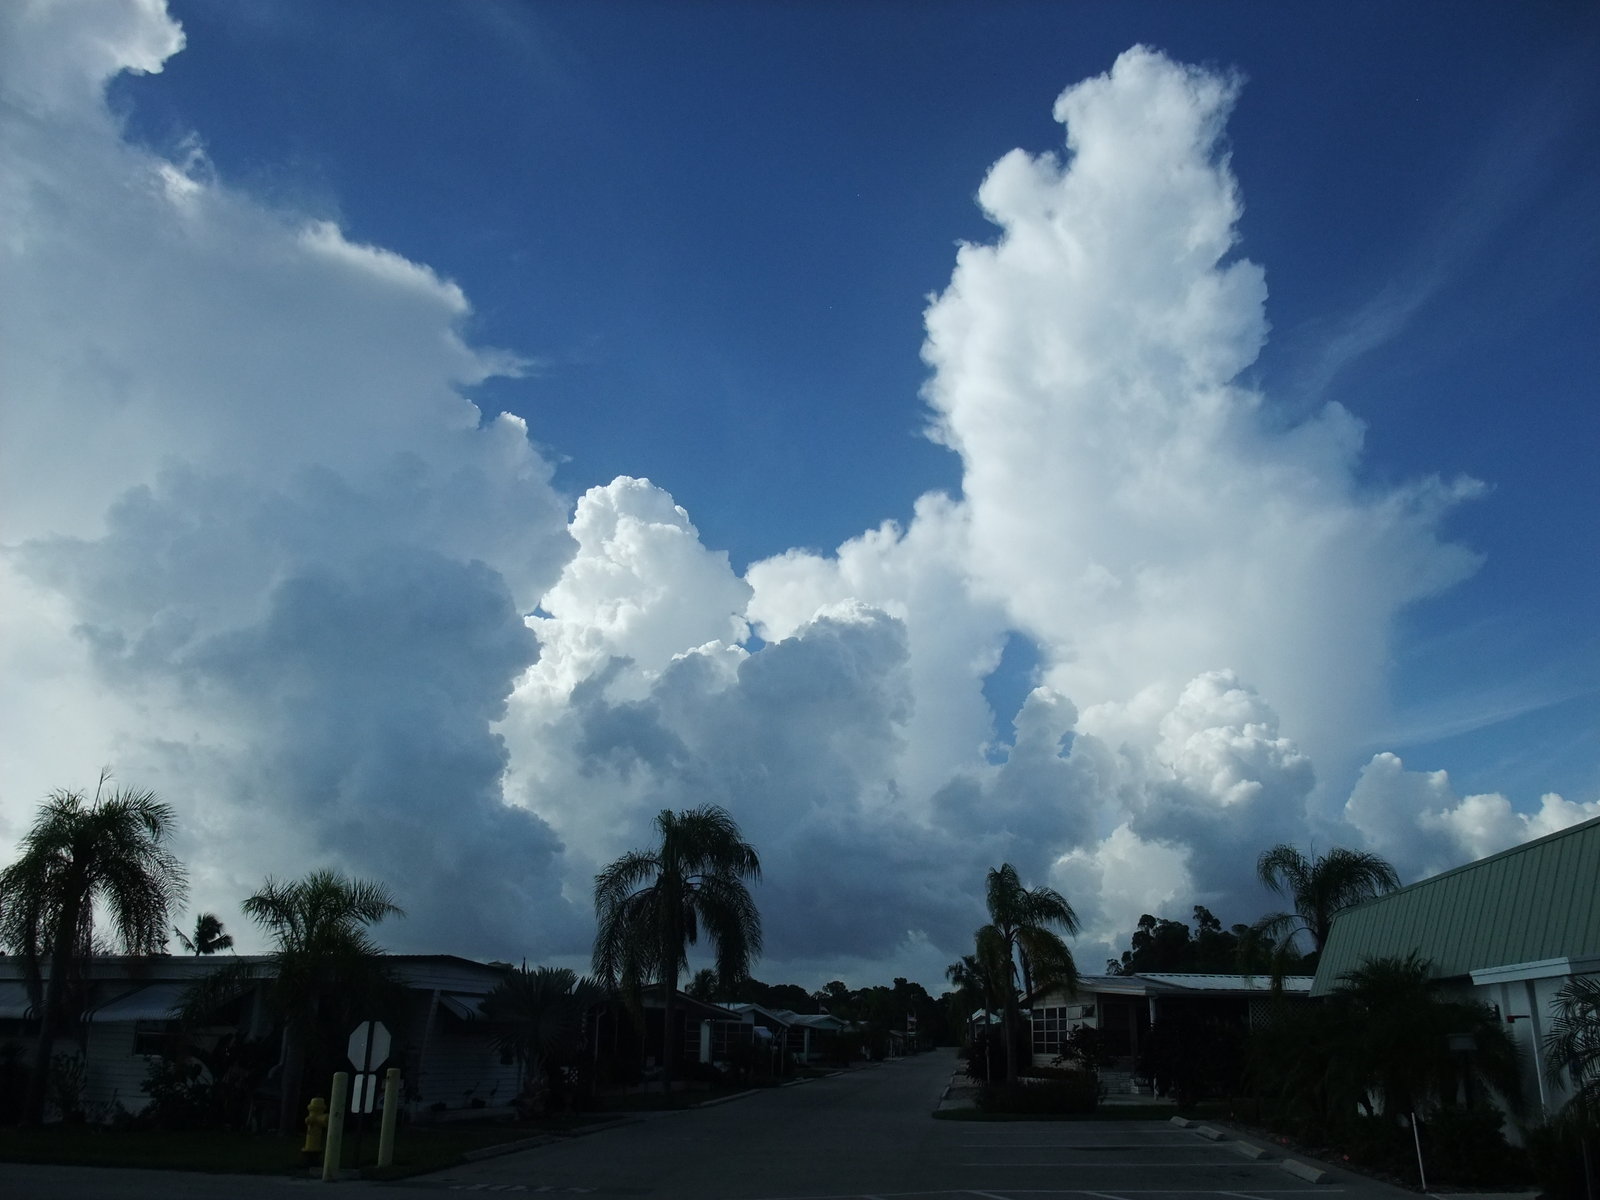 Florida Clouds by GameMaster666 on DeviantArt